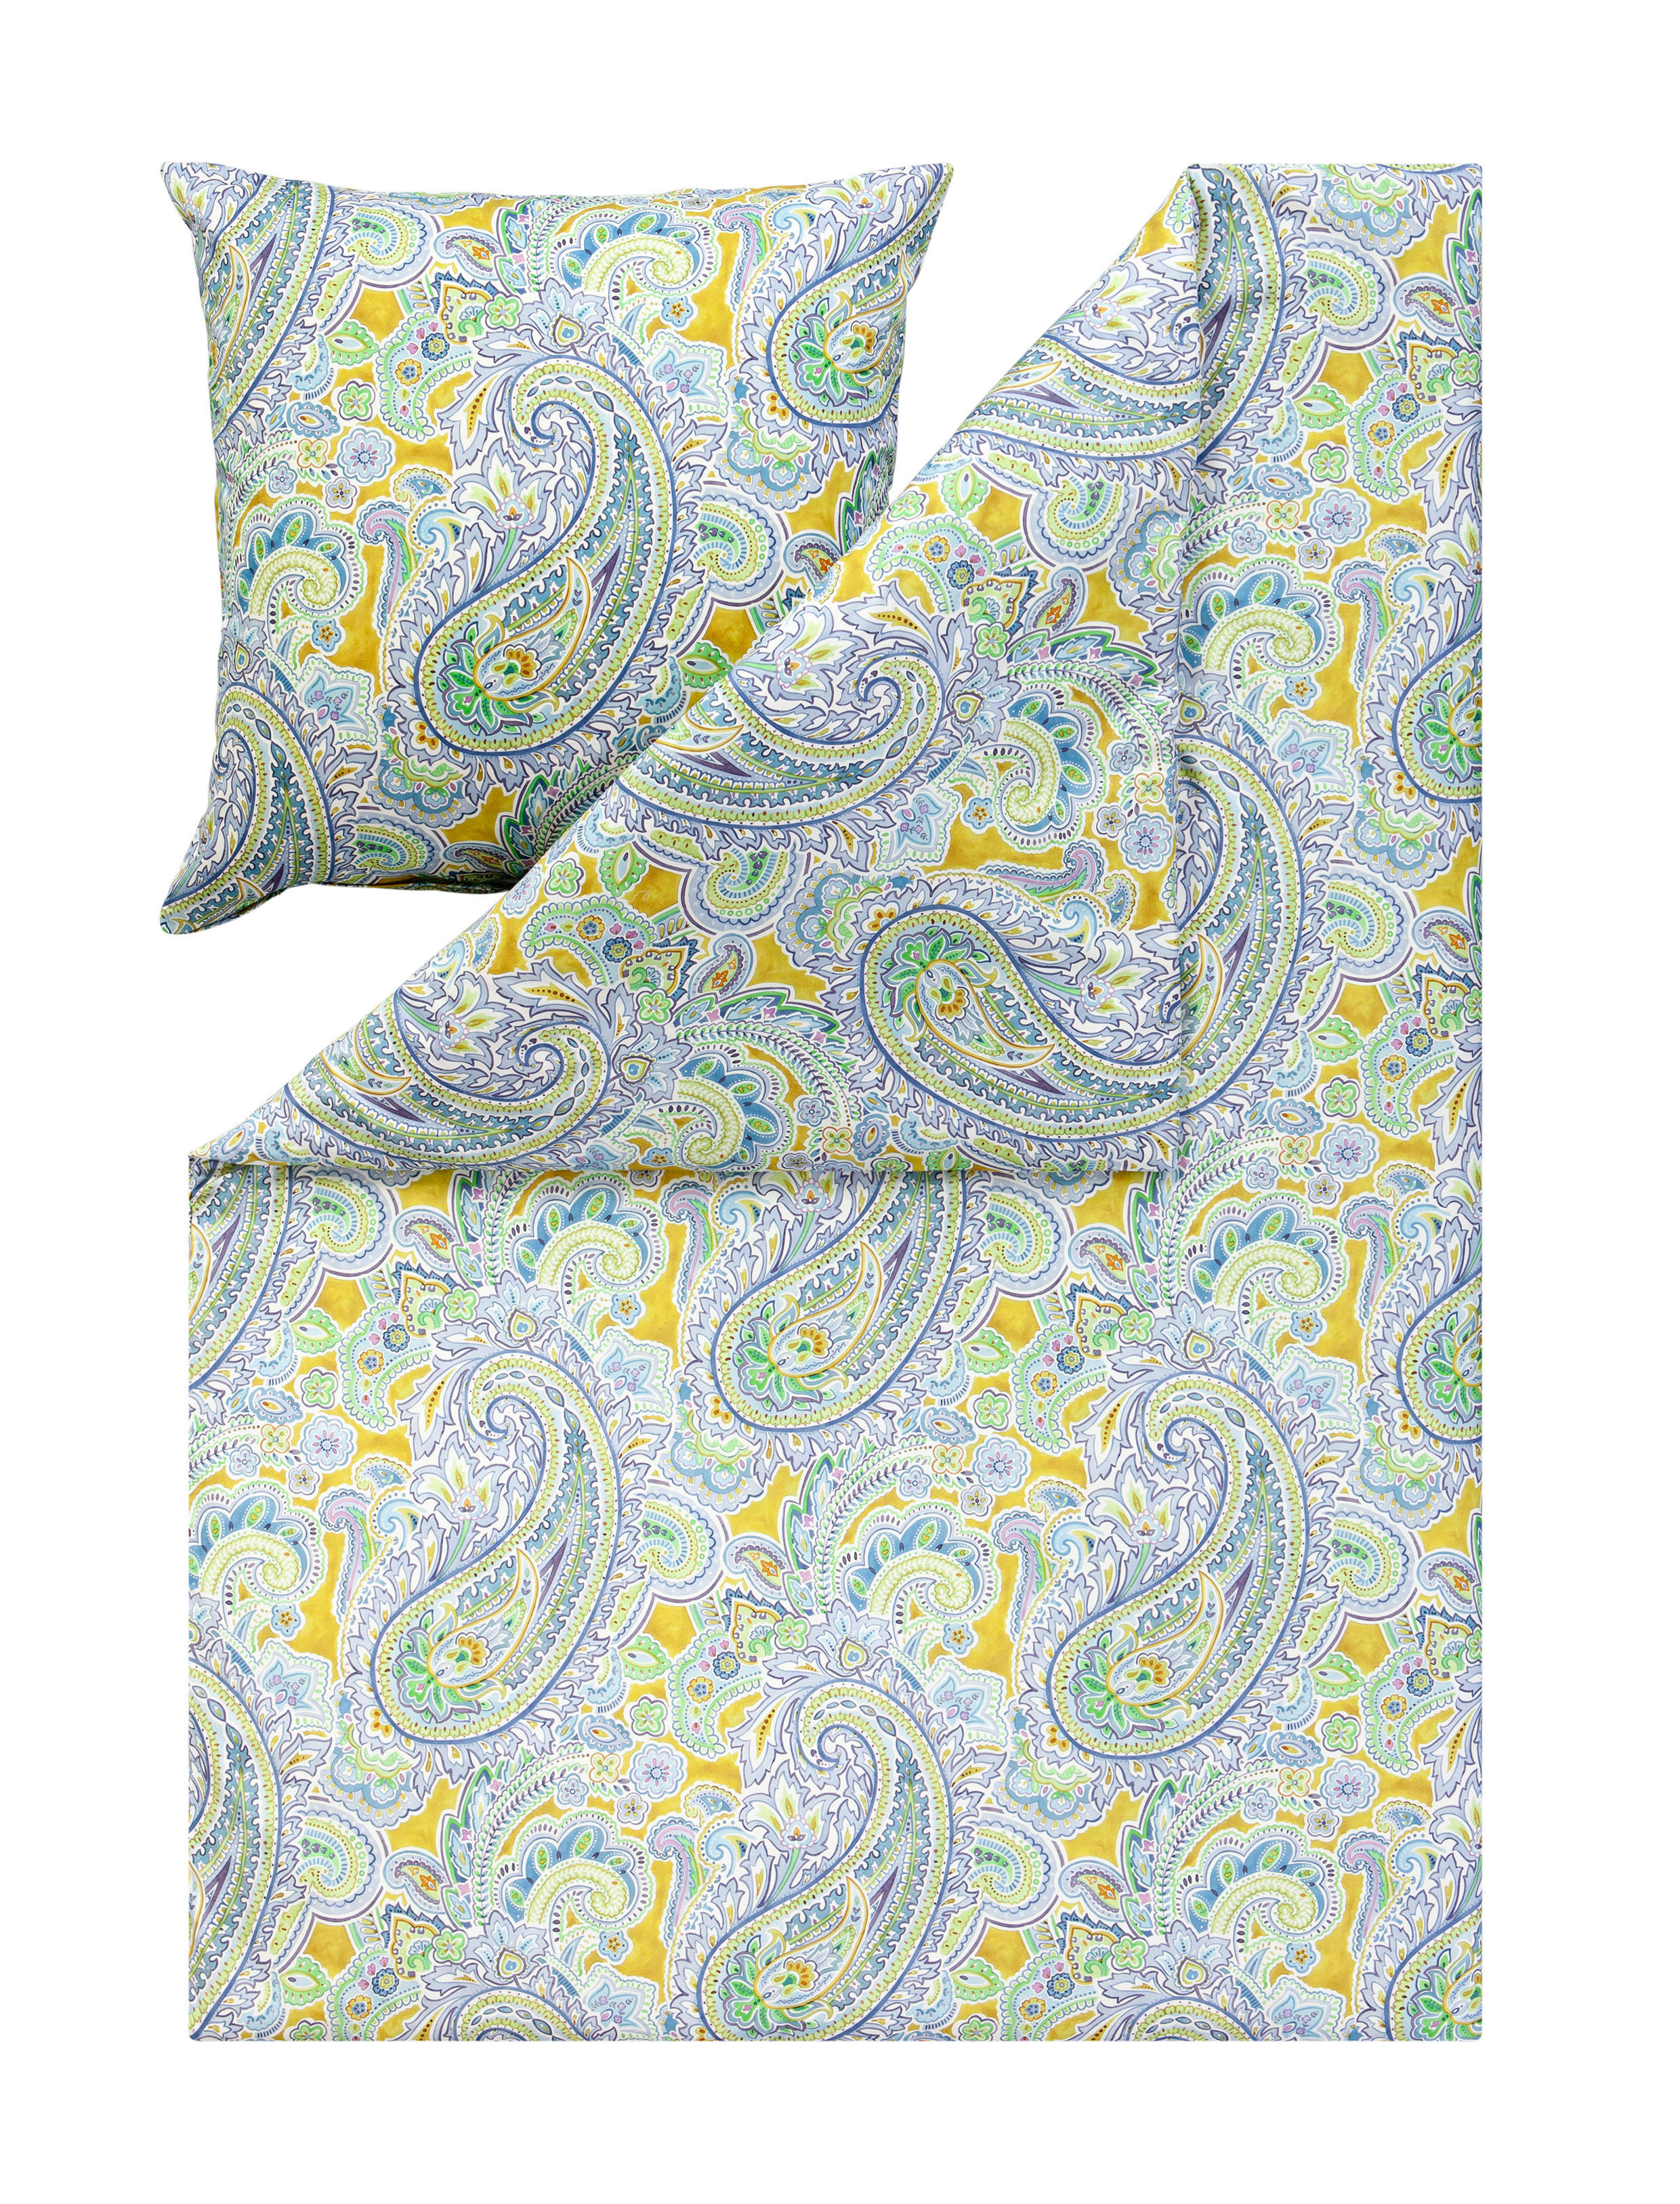 BETTWÄSCHE CHELSEA Satin  - Multicolor, Trend, Textil (135/200cm) - Estella